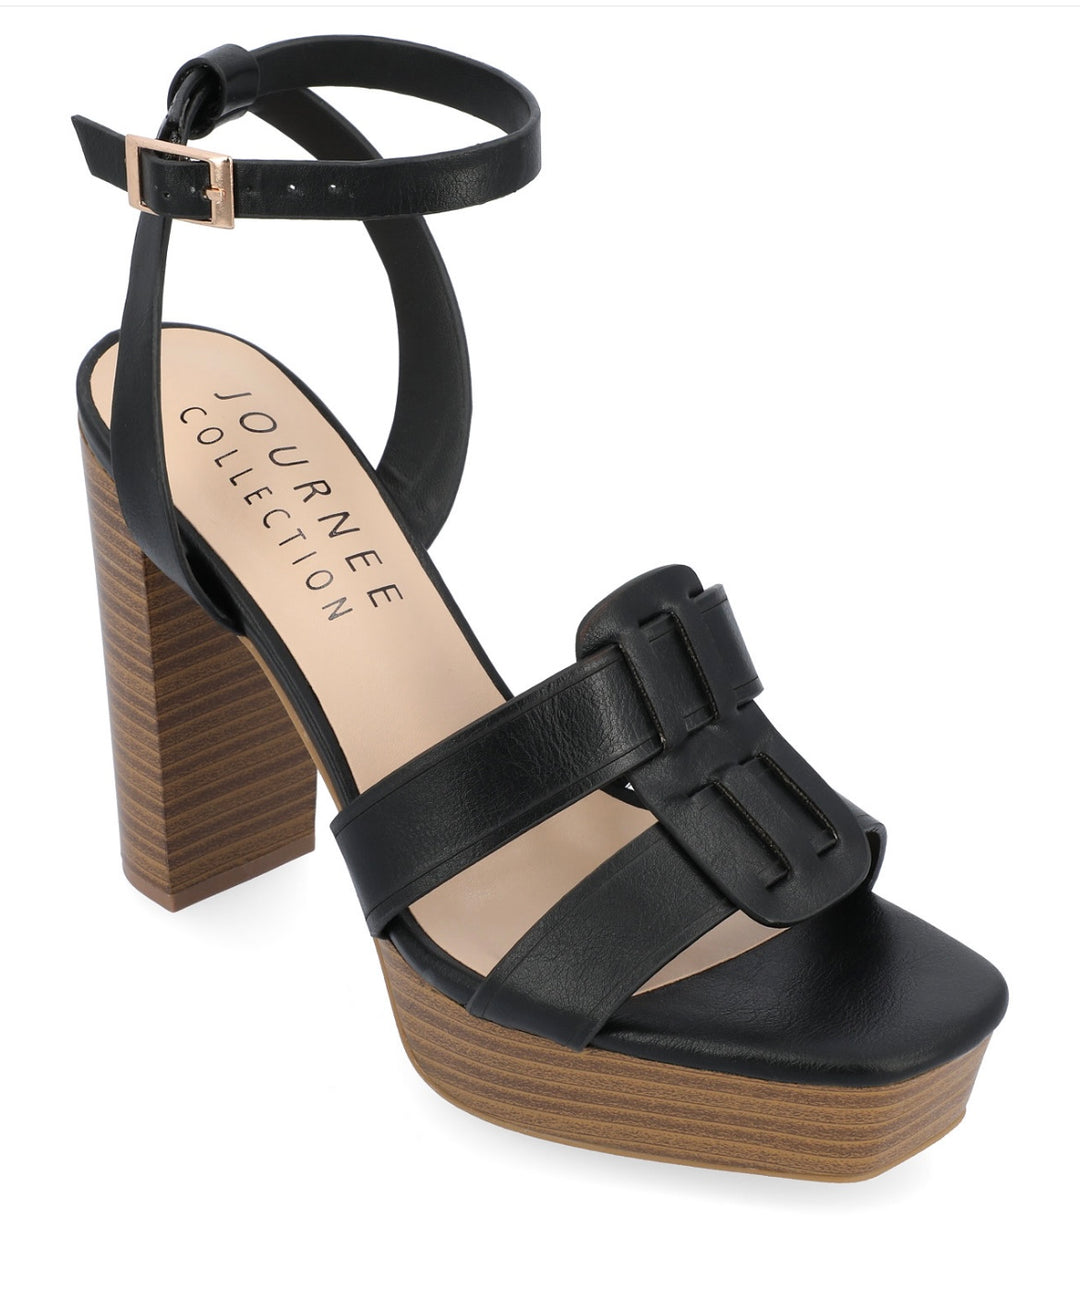 Journee Collection Women's Mandilyn Platform Sandals Black